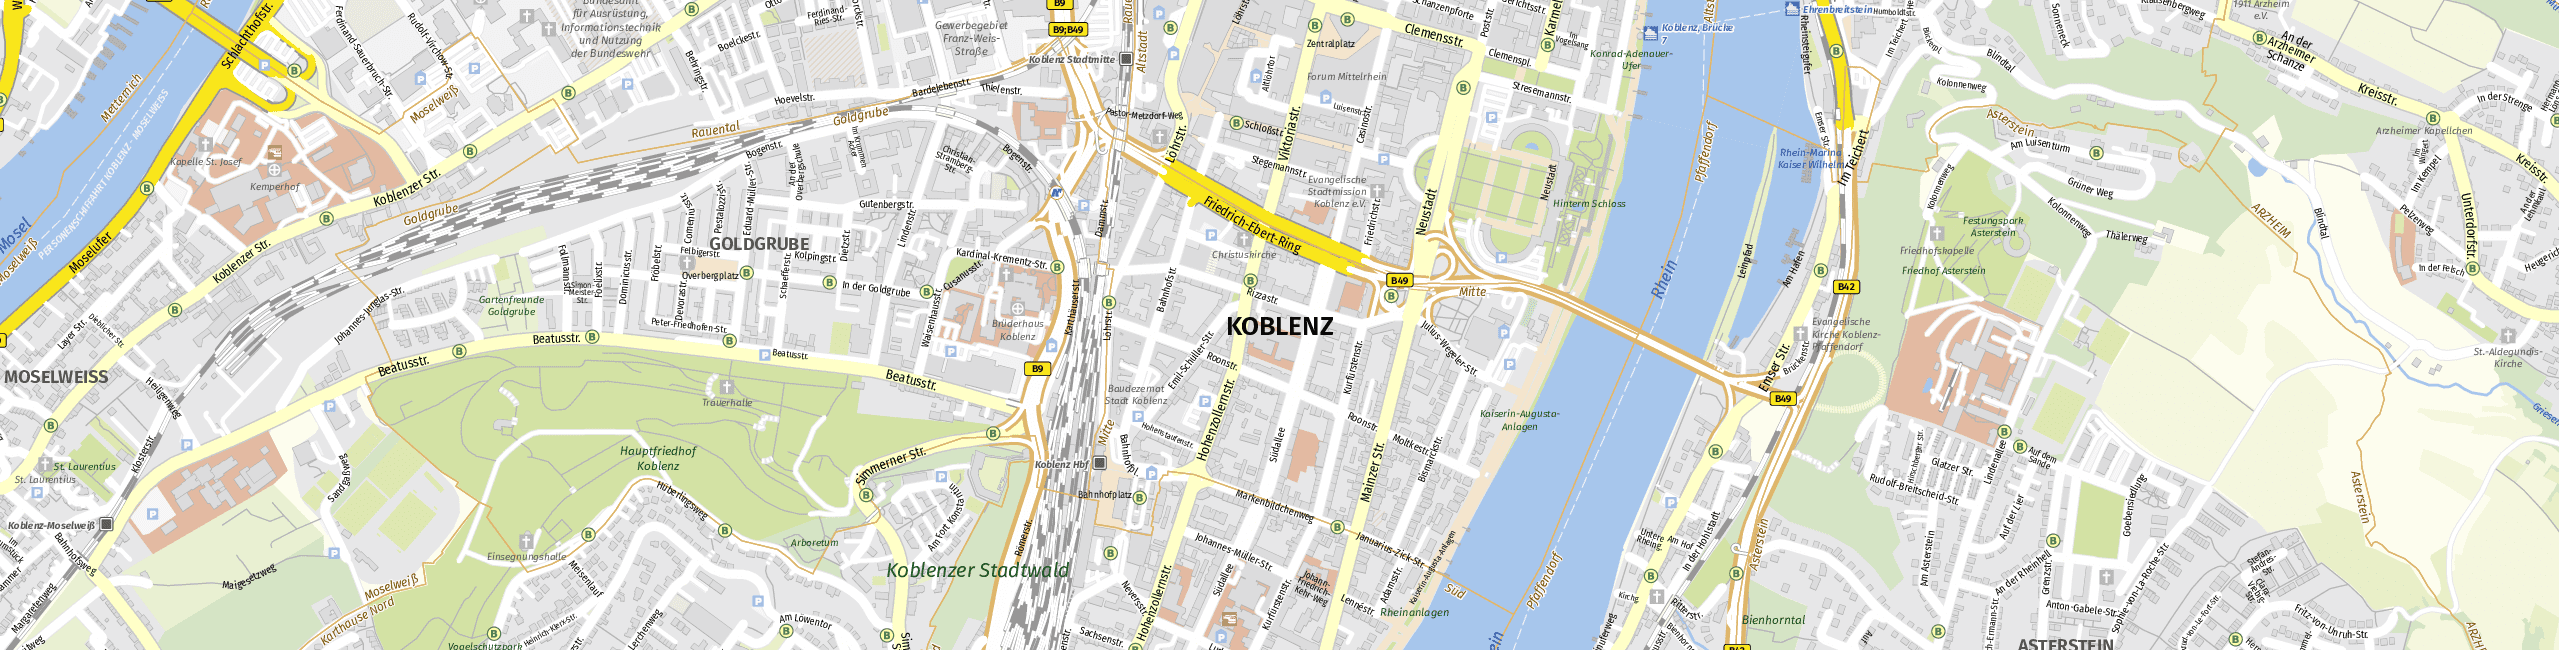 Stadtplan Koblenz zum Downloaden.